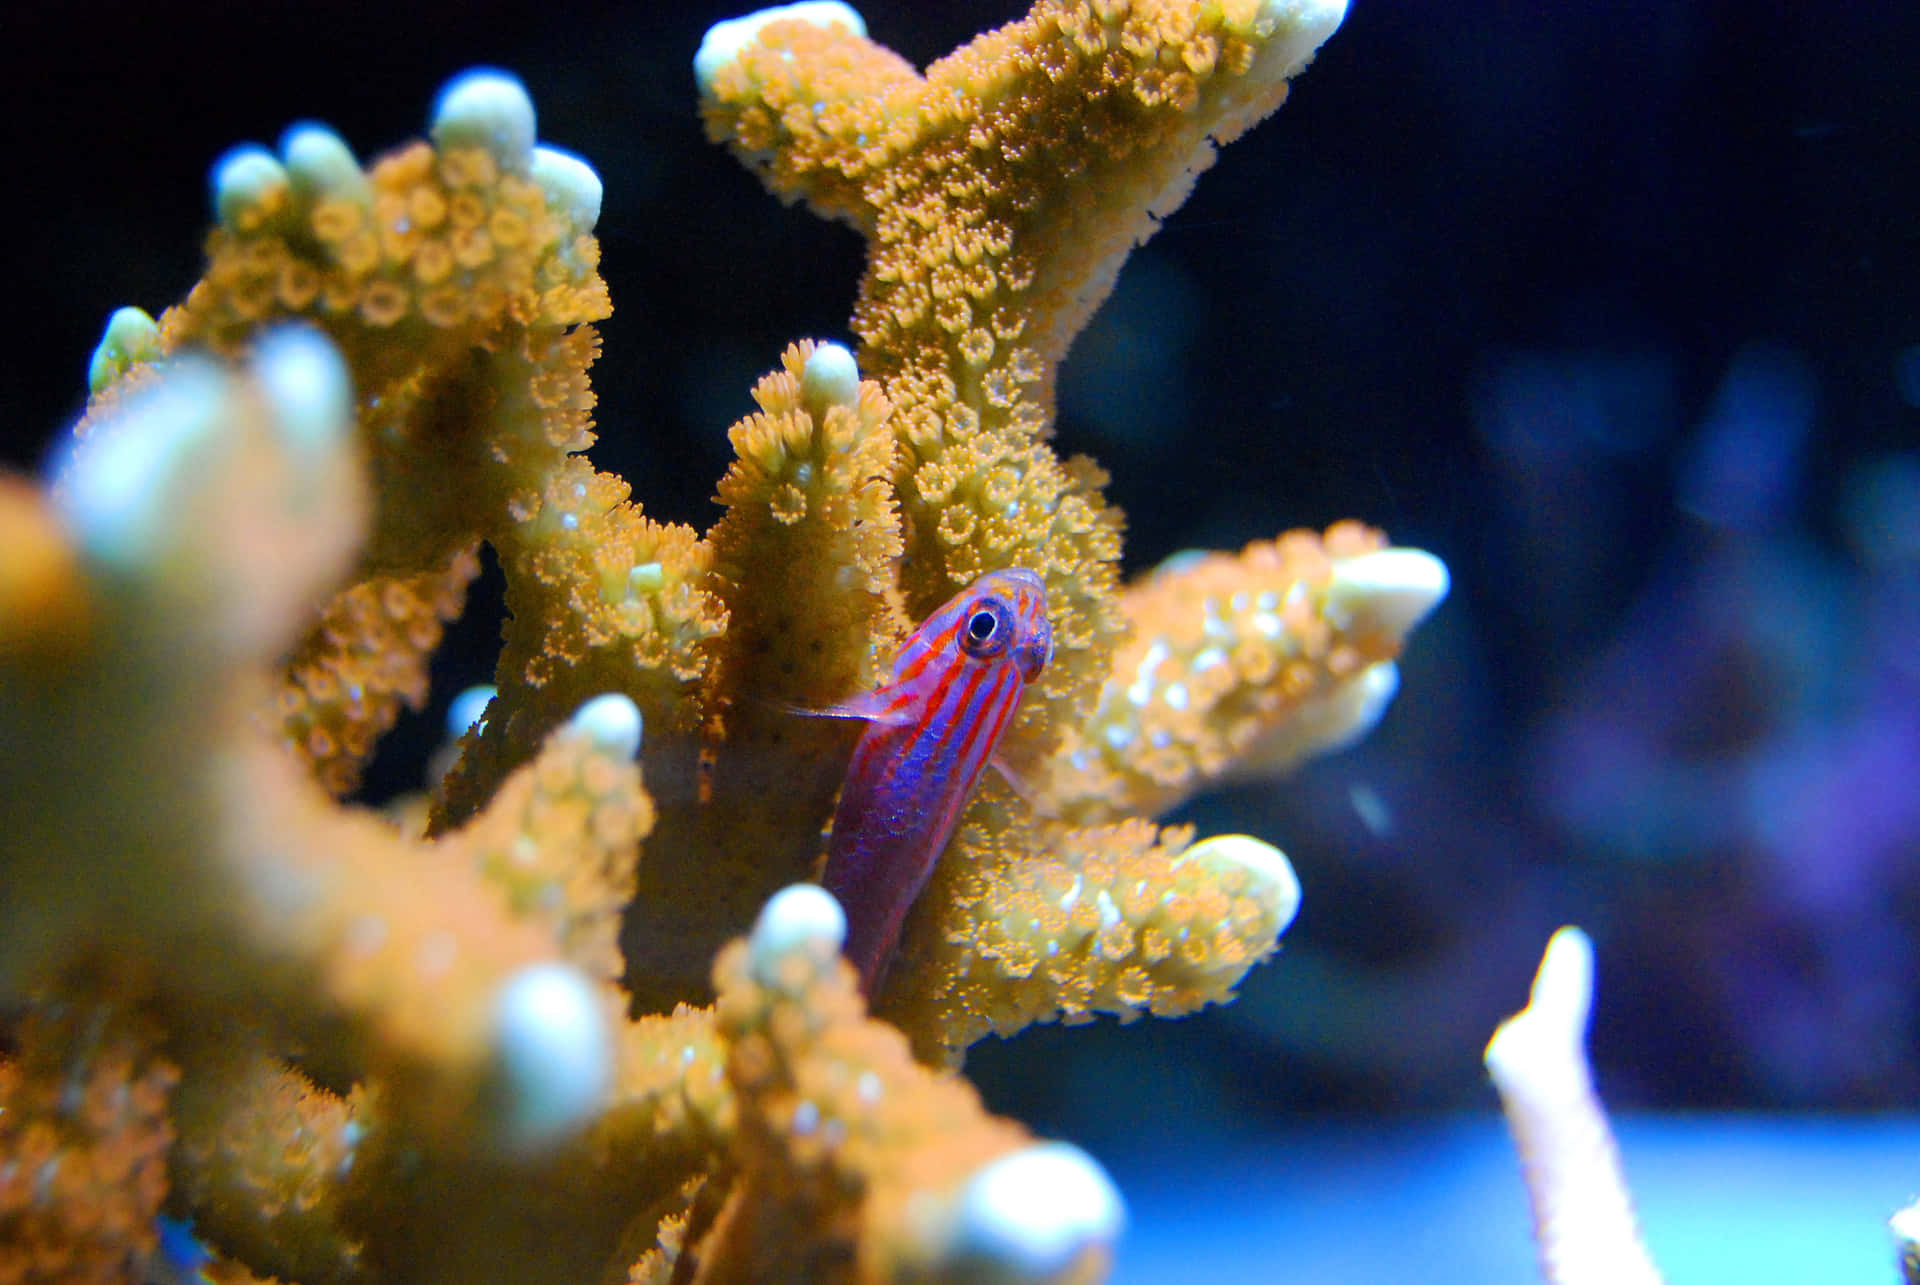 A Stunning Aquarium Filled with Fascinating Sea Creatures